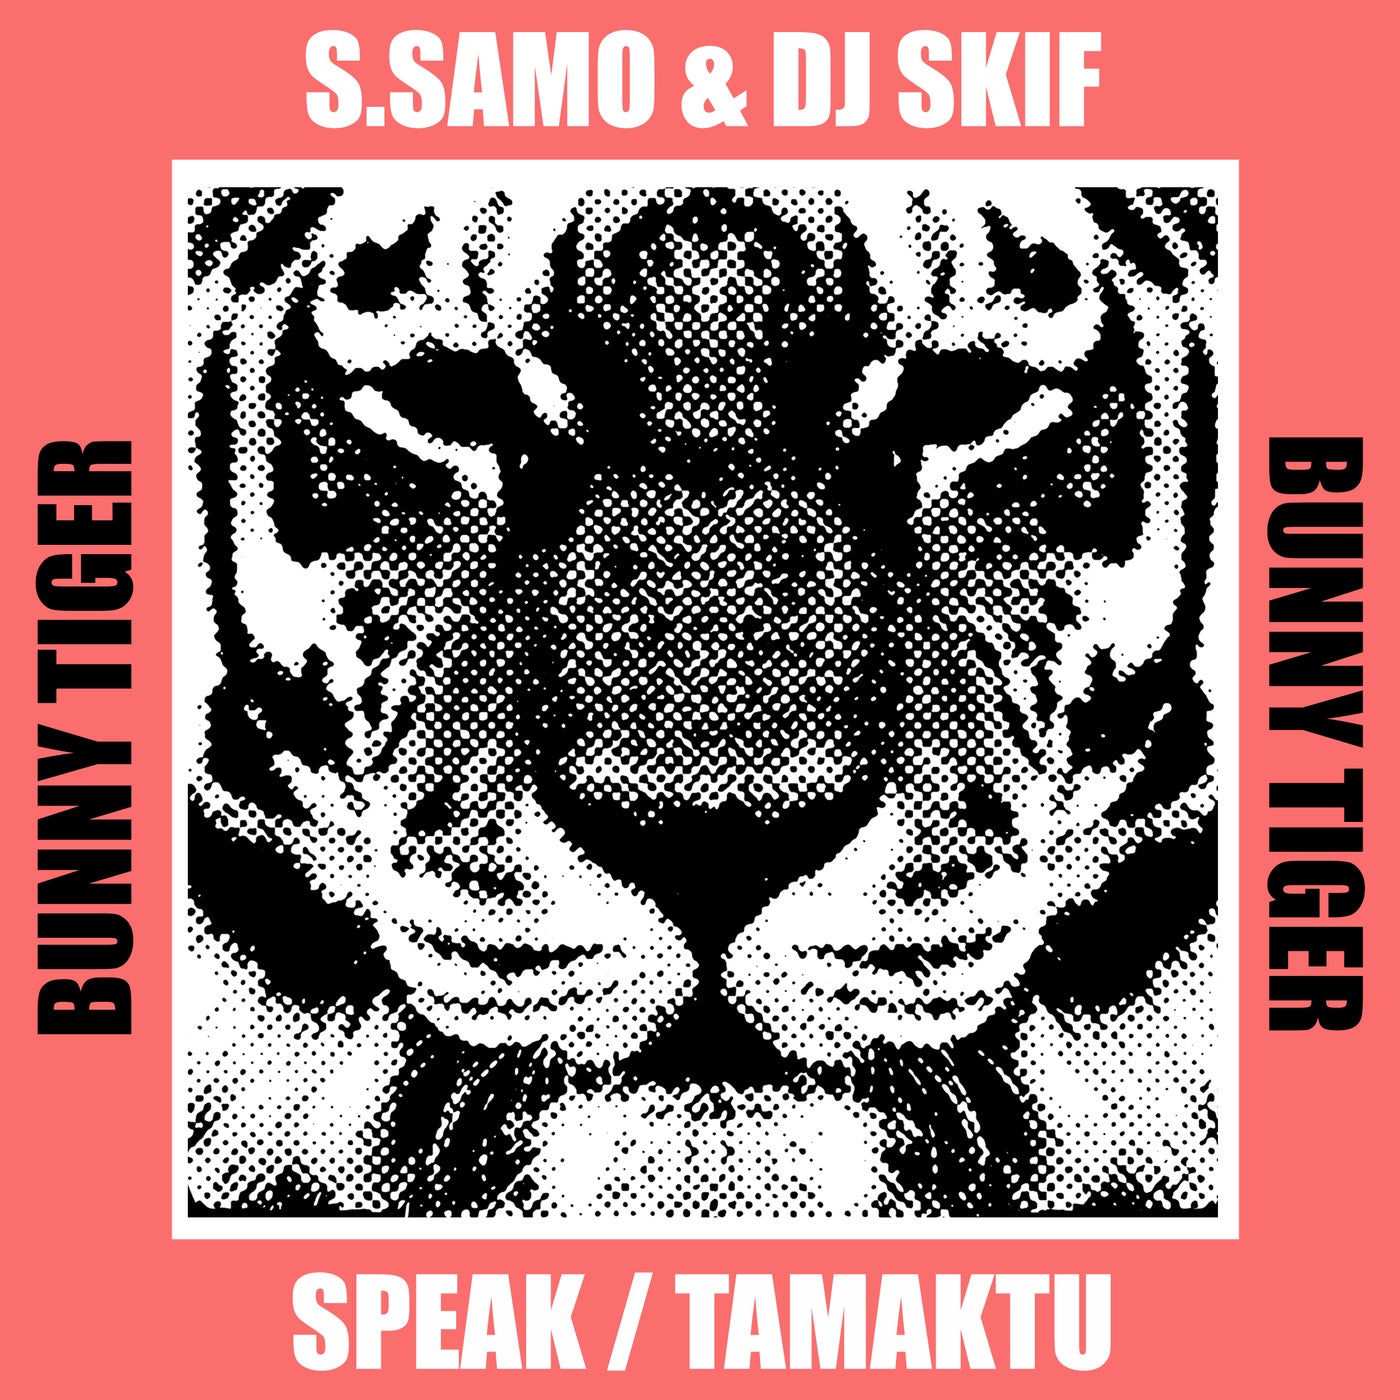 Speak / Tamaktu